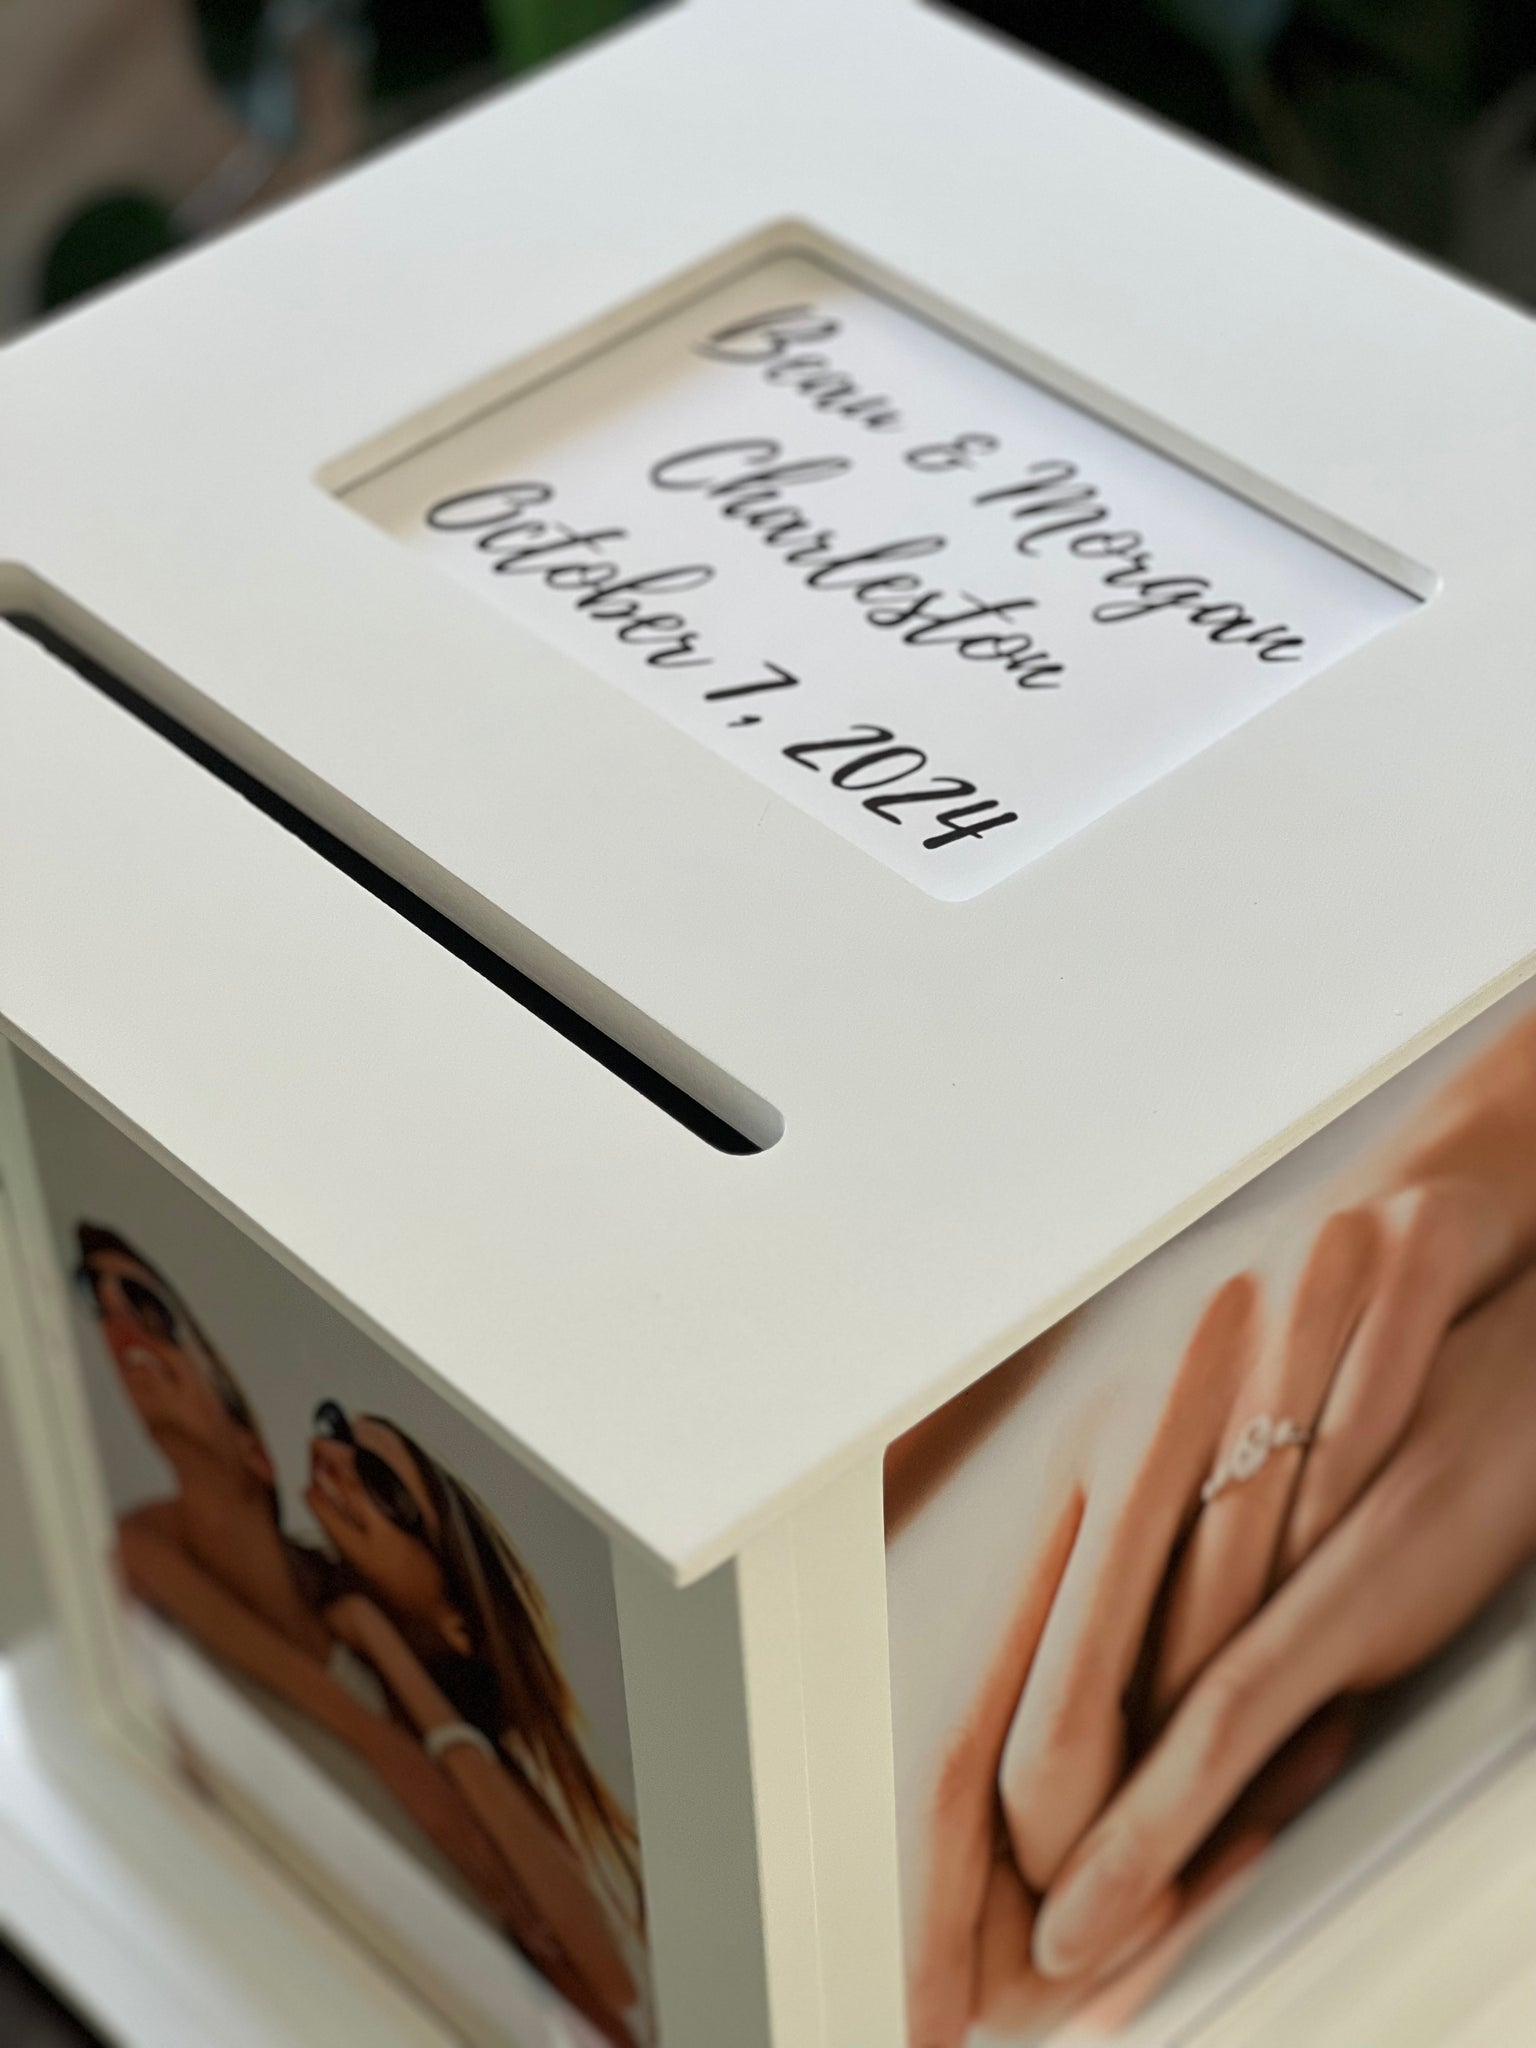 How To - DIY Wedding Card Box